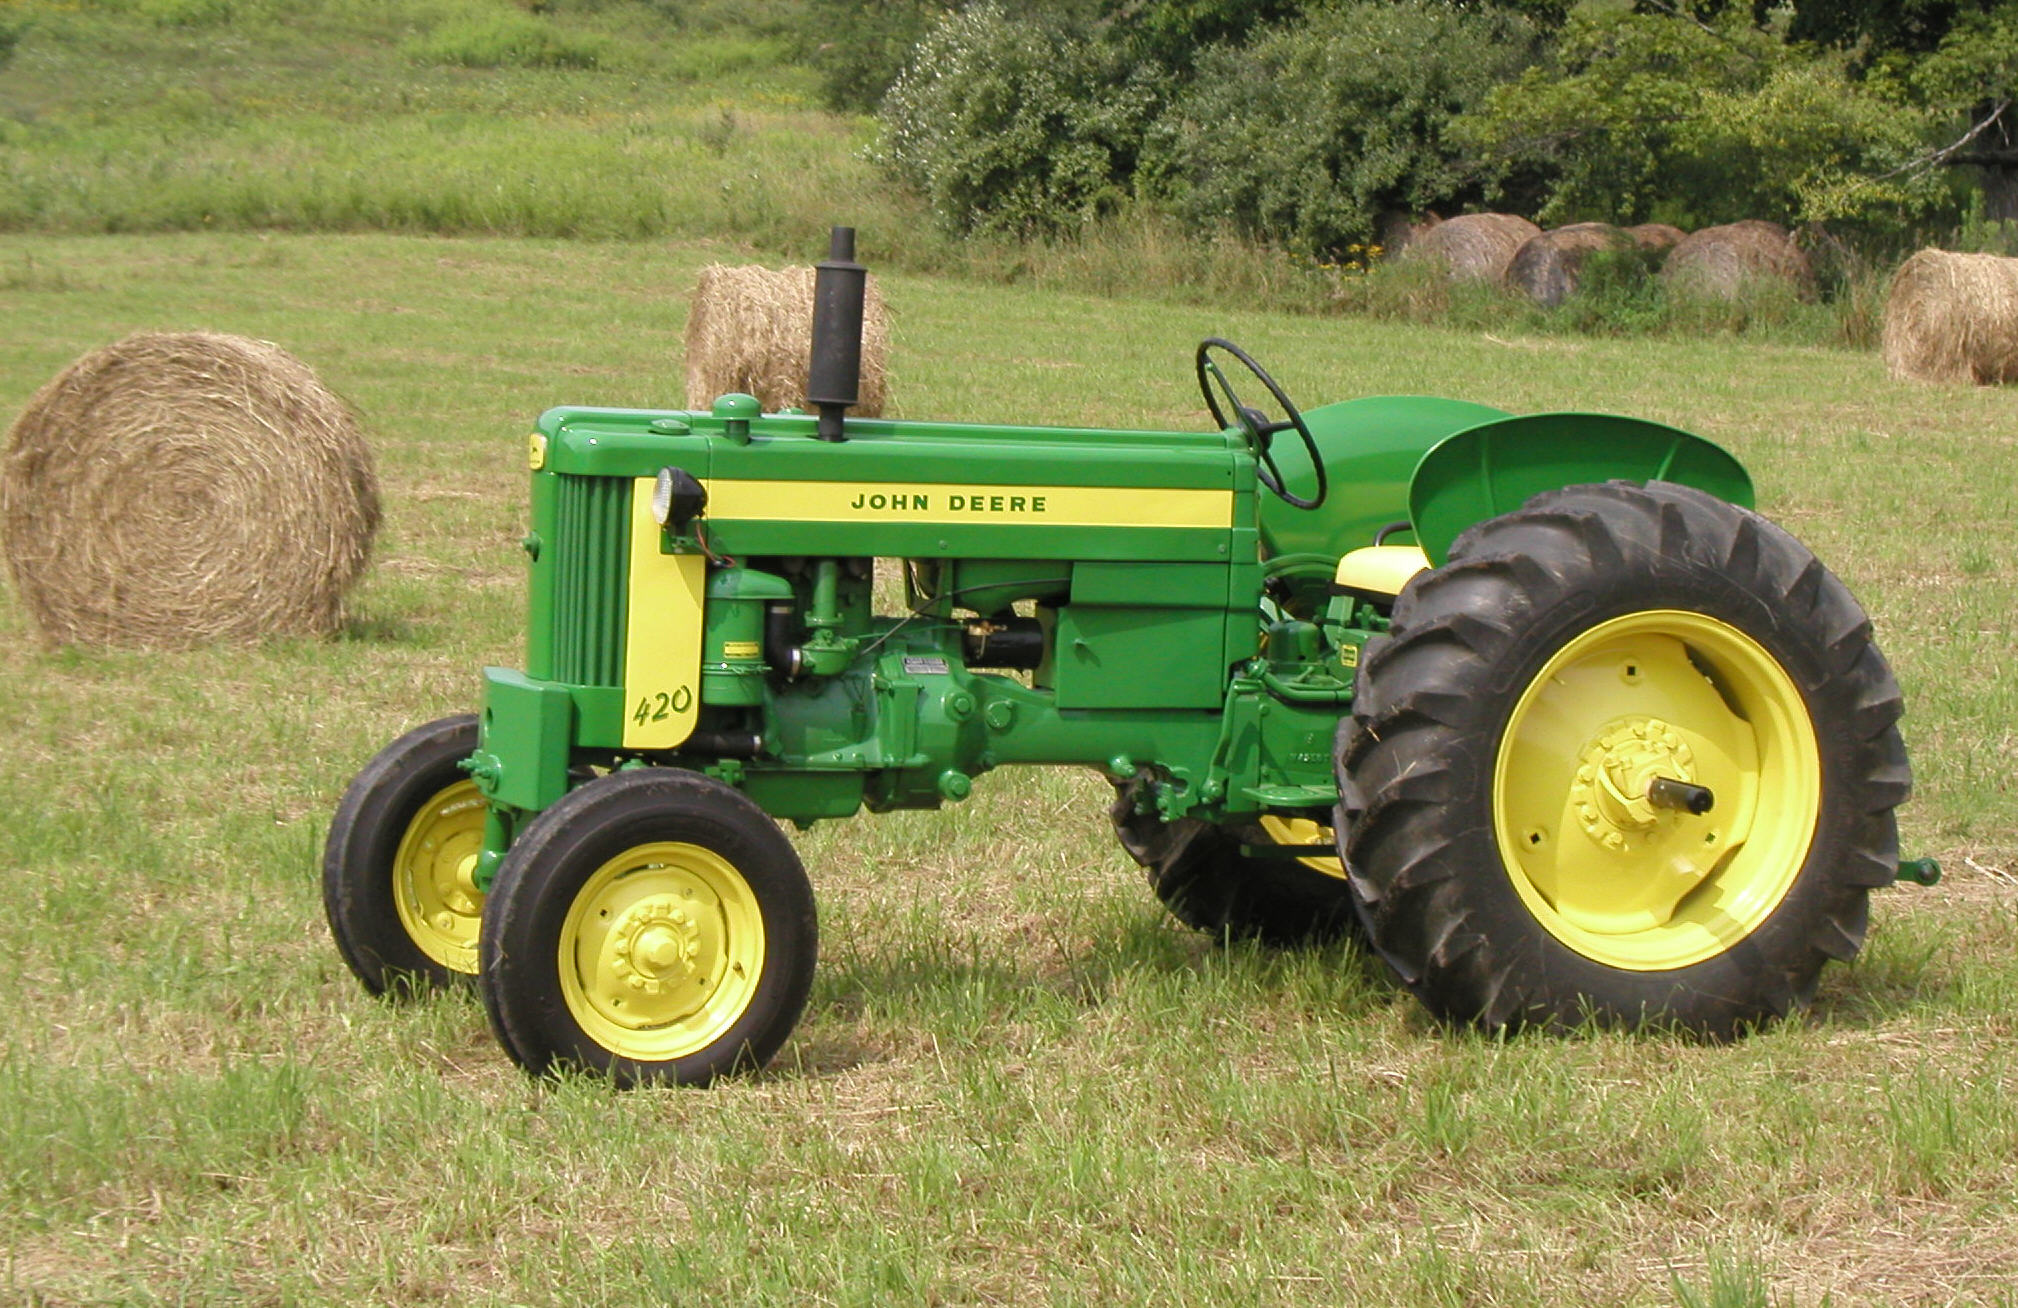 John Deere Model 420 Tractor History TWO CYLINDER Magazine 420U 420 crawler